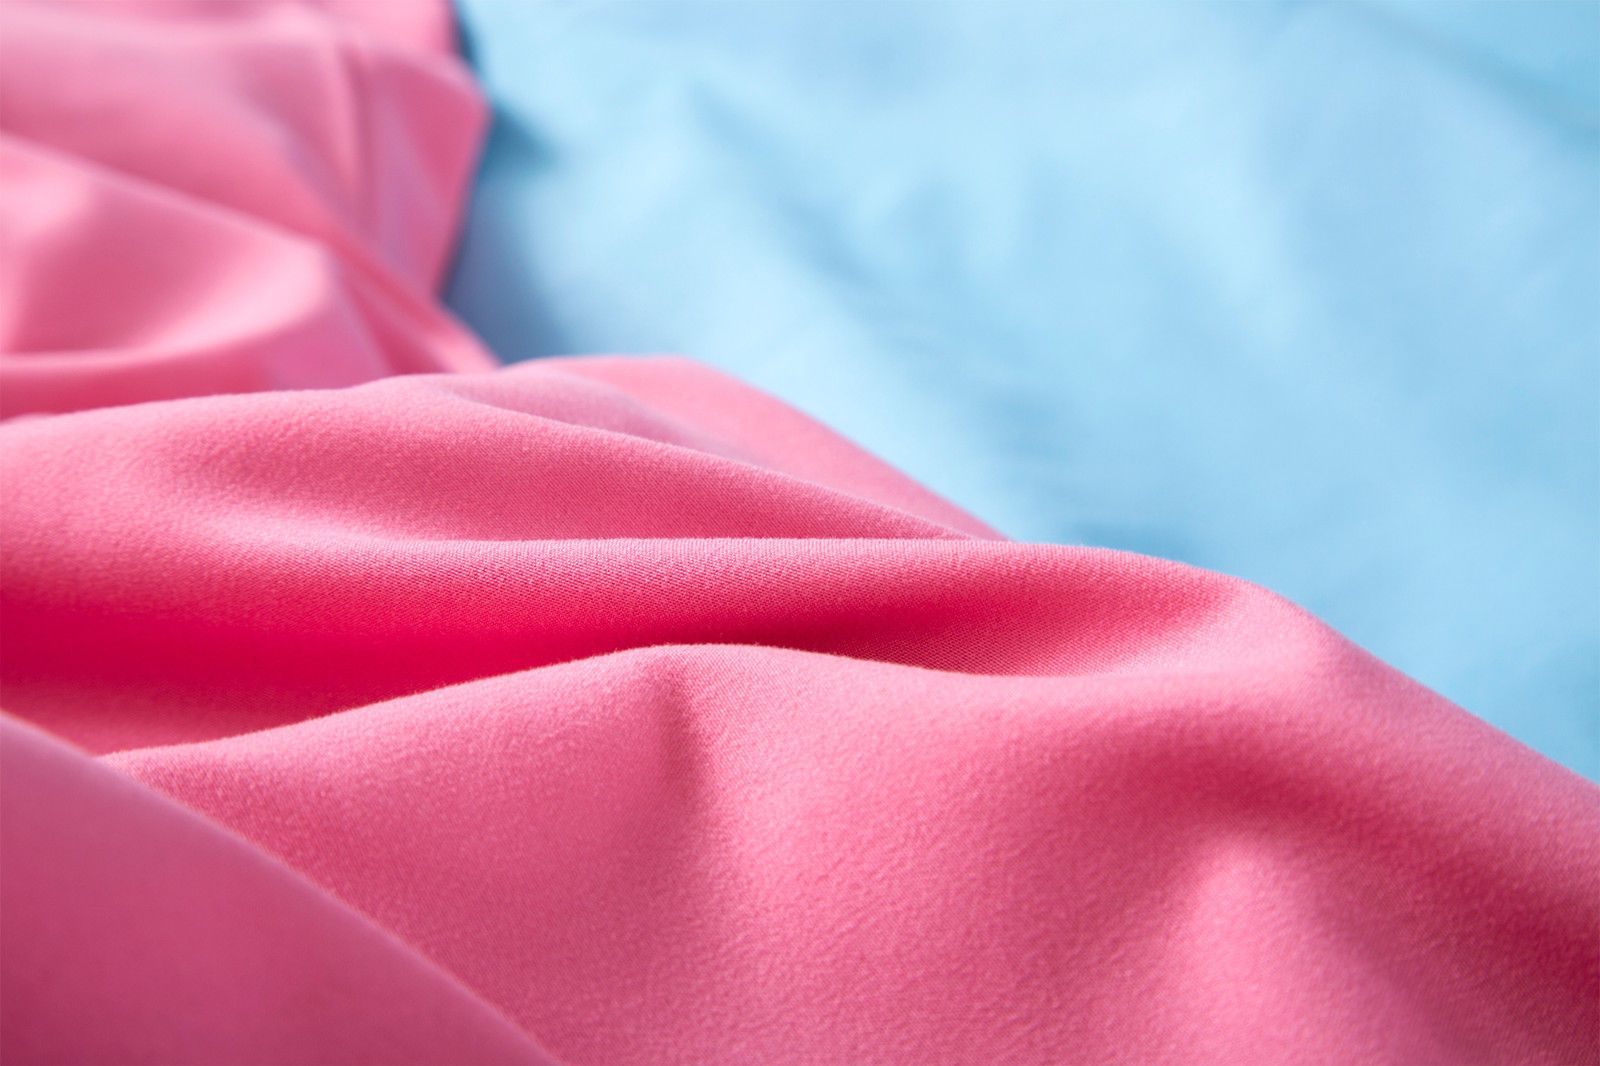 3D Fashion Women 36 Bed Pillowcases Quilt Wallpaper AJ Wallpaper 